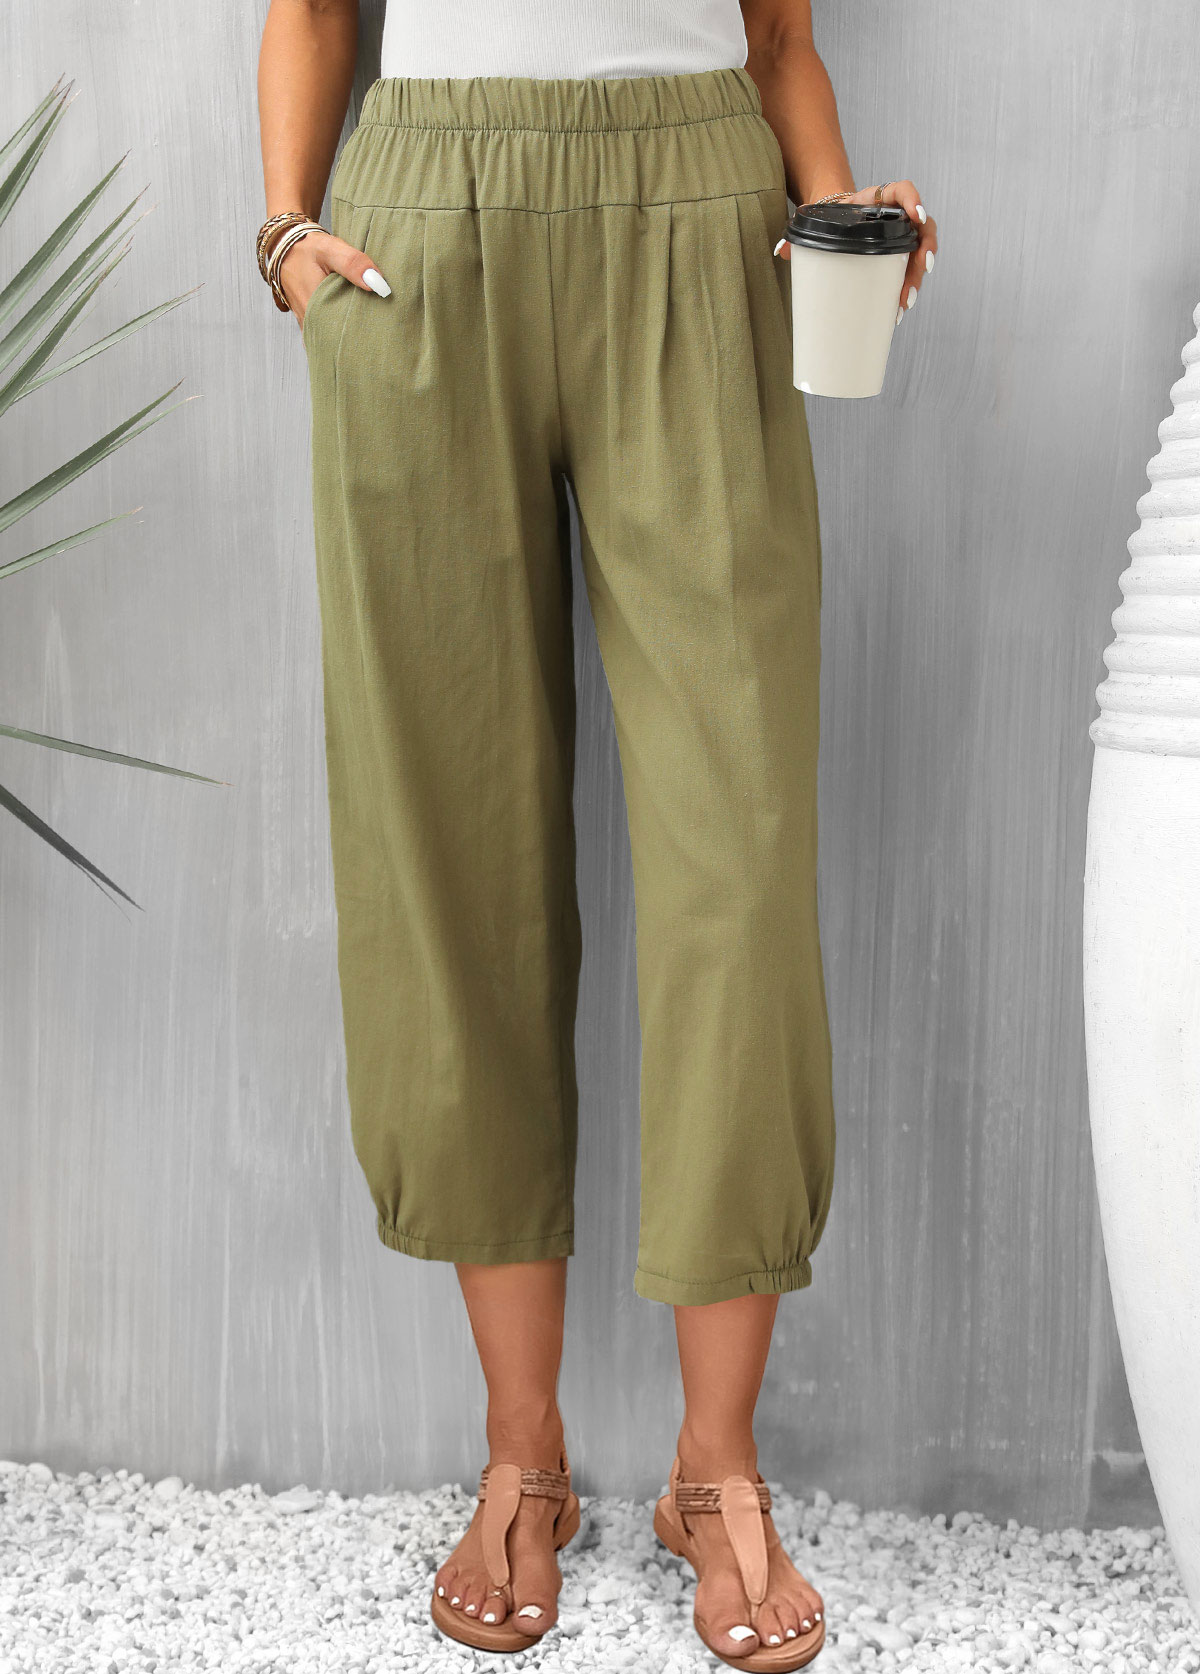 Pocket Olive Green Regular Elastic Waist Pants